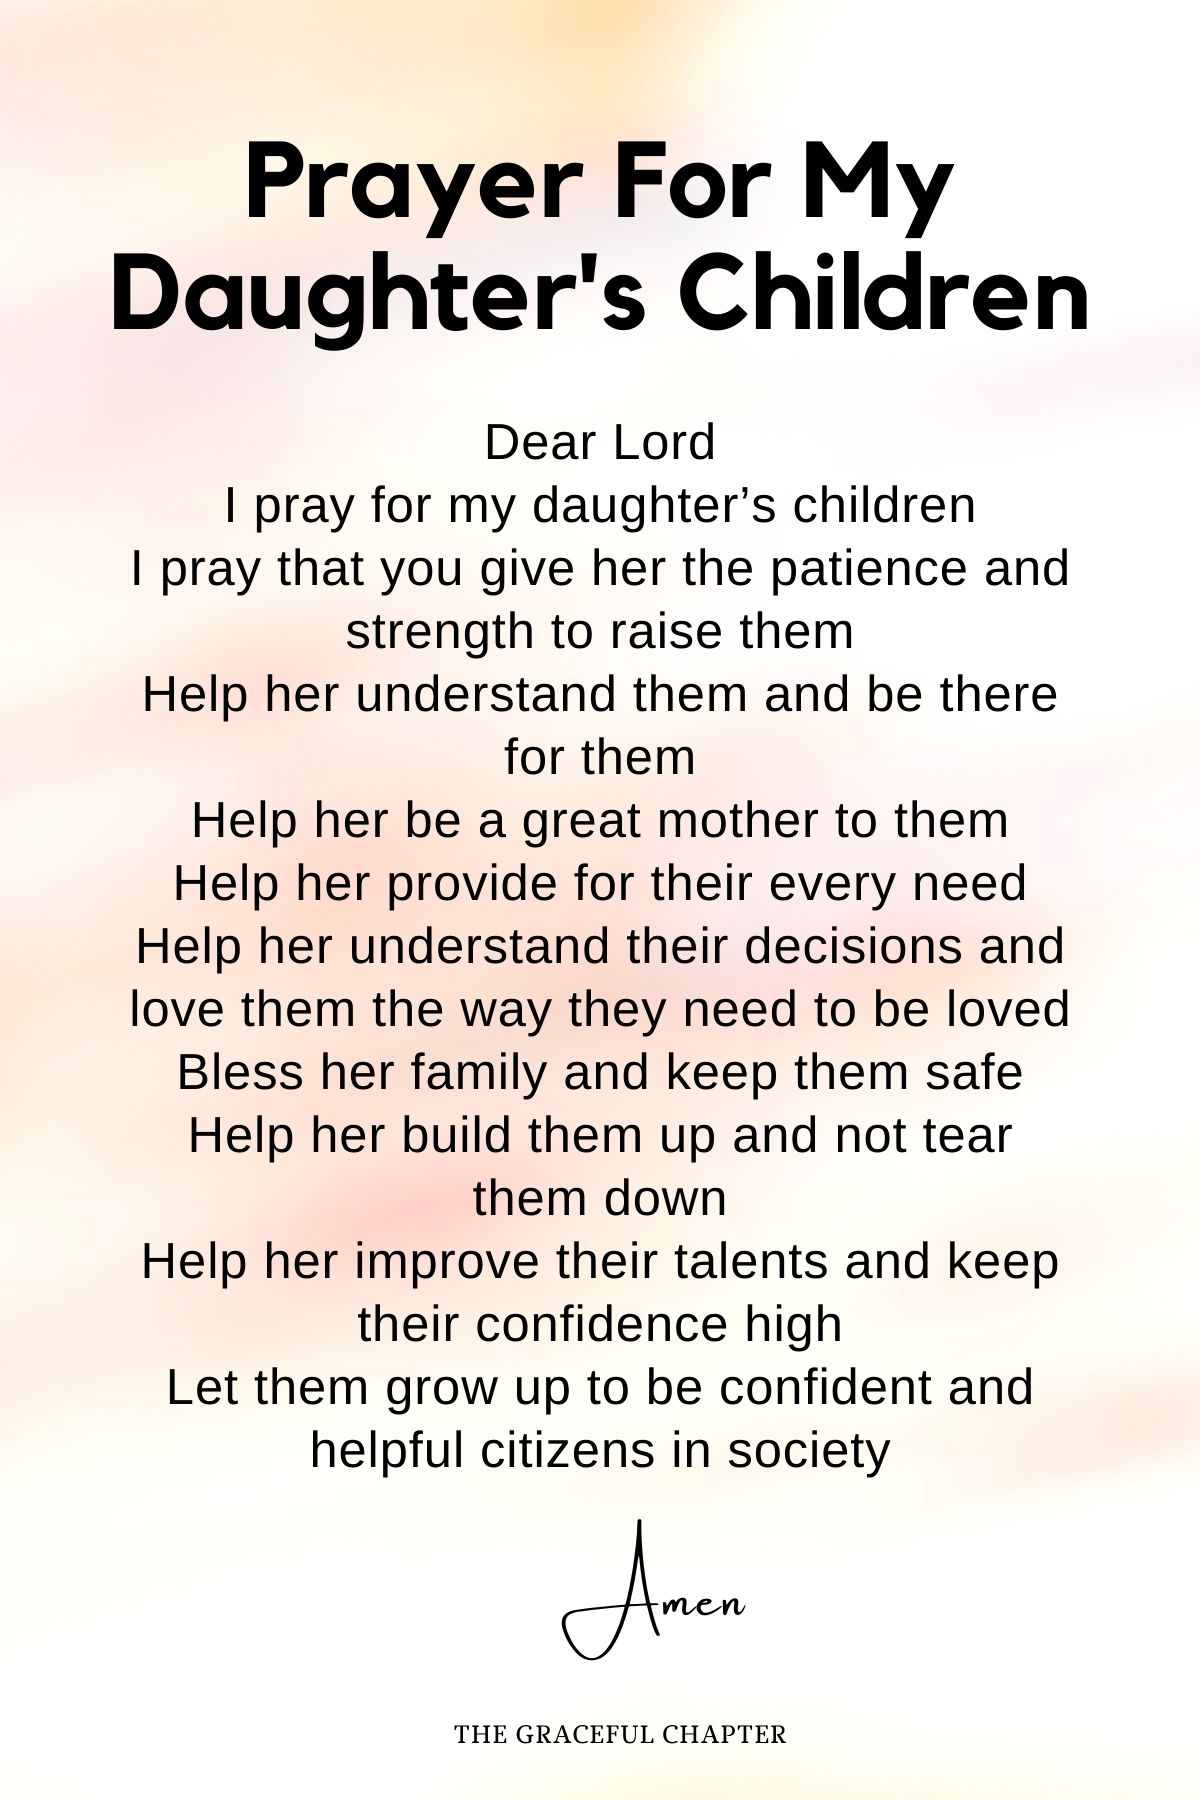  Prayer for my daughter's children